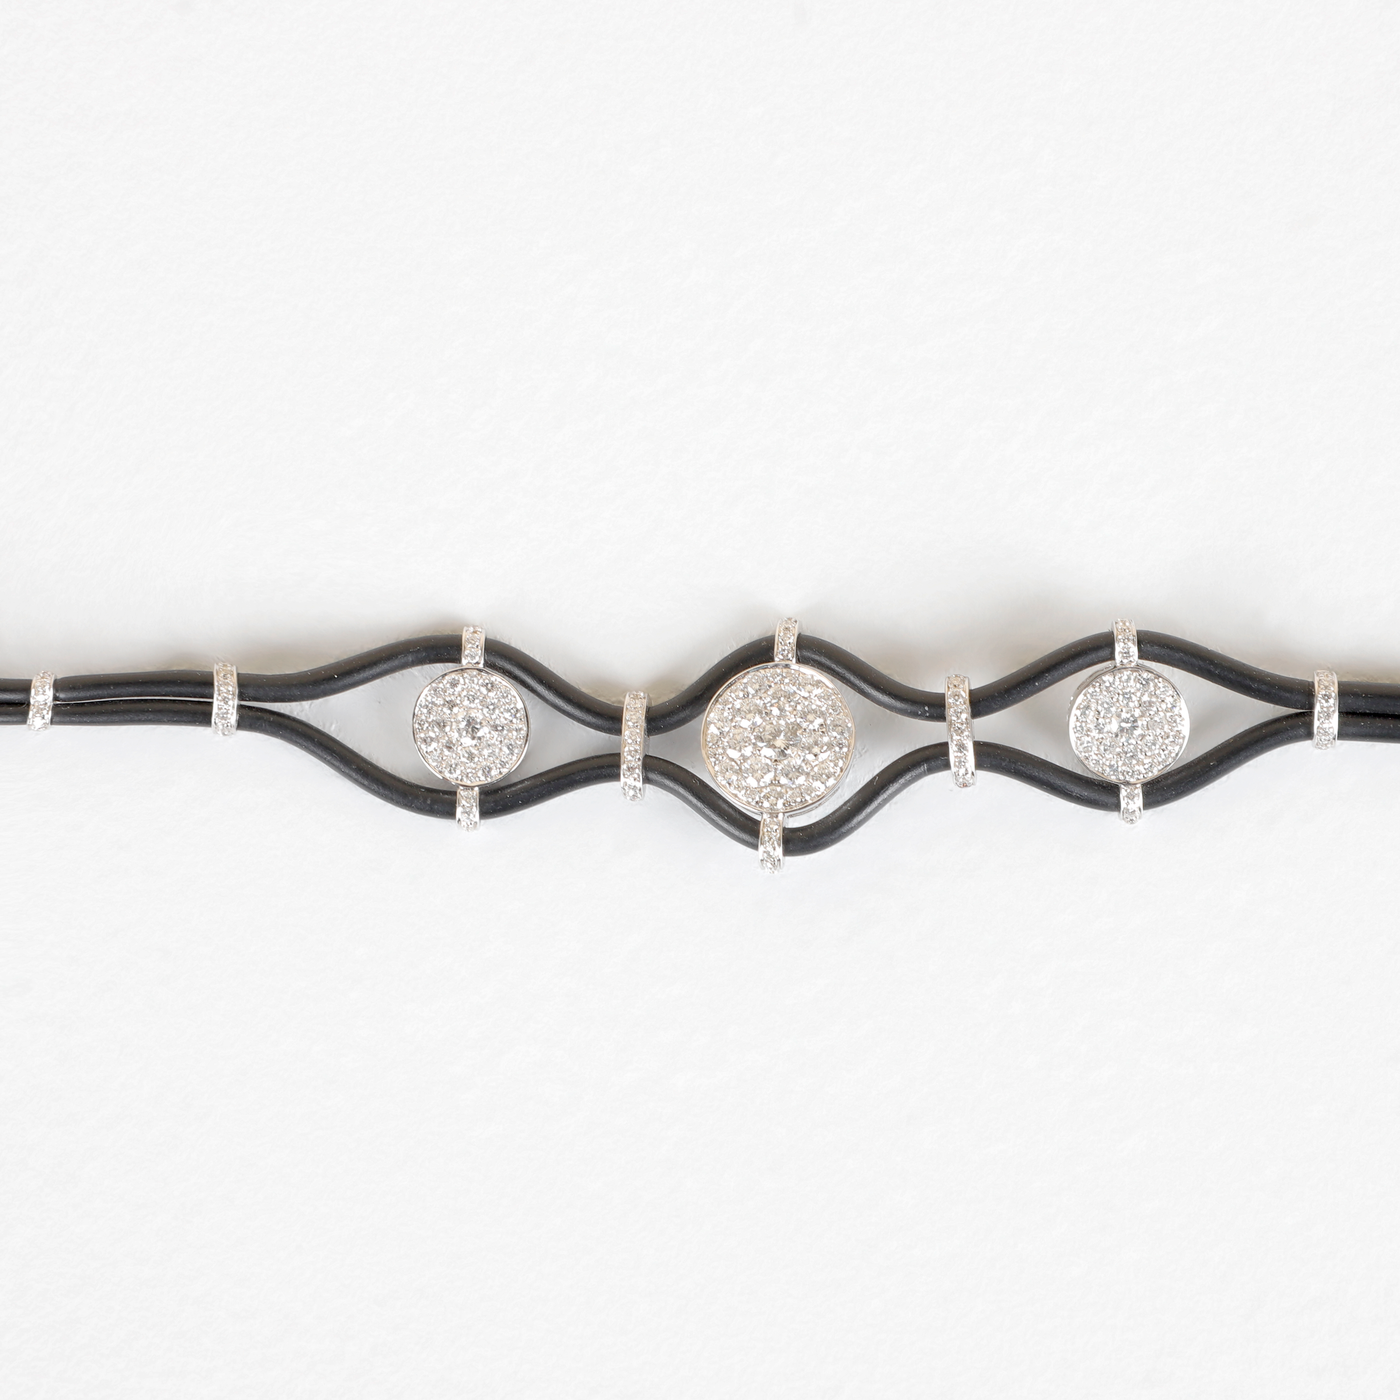 Trapeze Art Deco Bracelet by Umrao Jewels